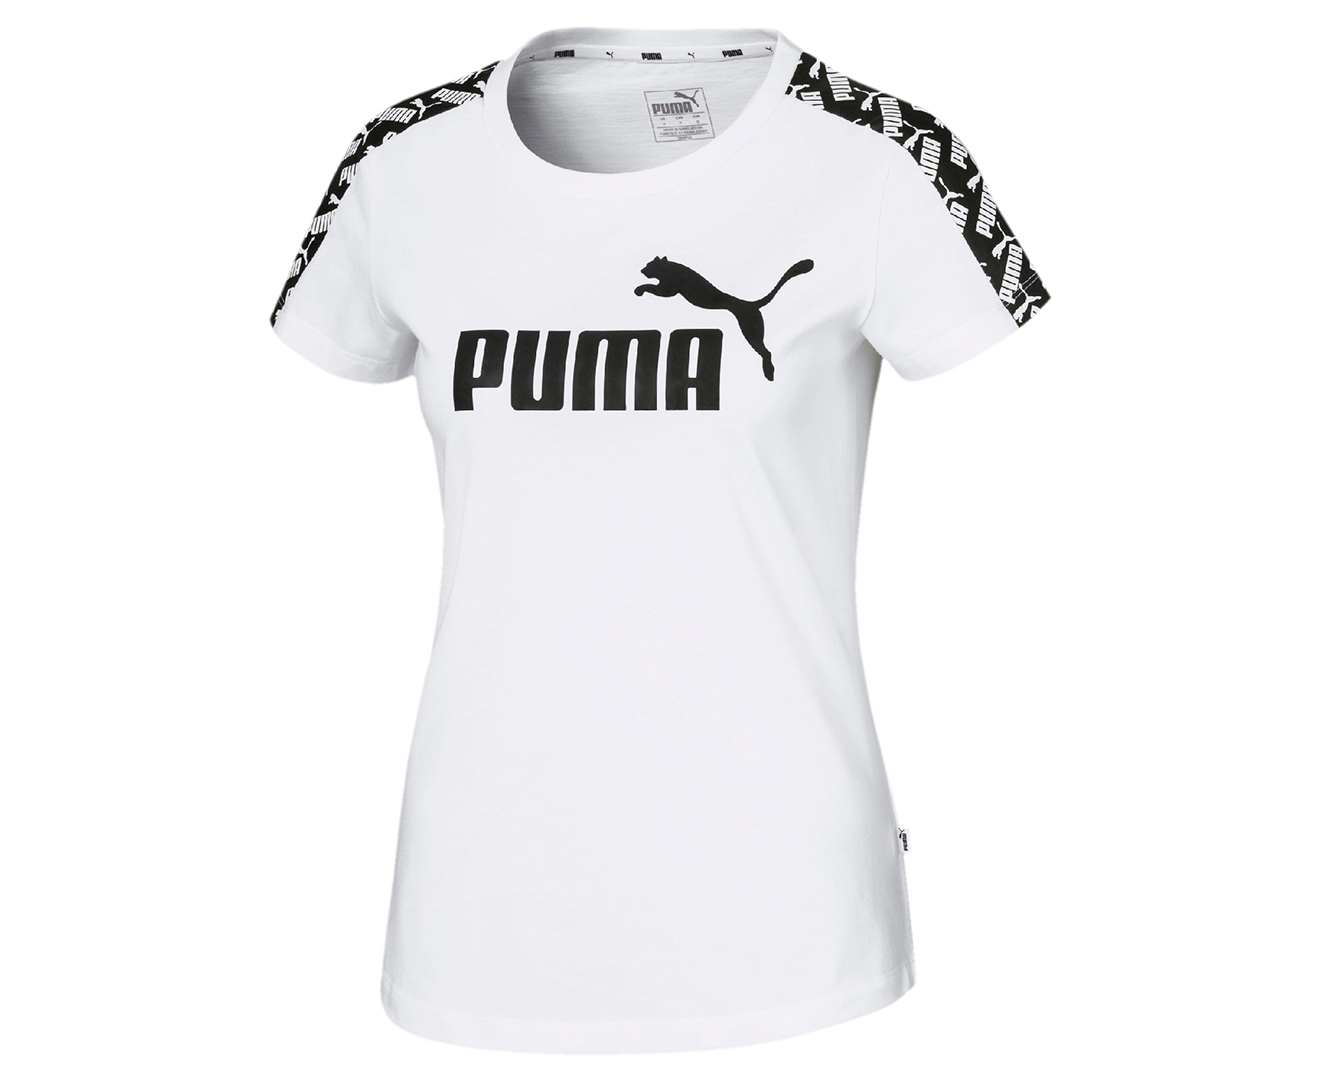 Puma Women's Amplified Tee / T-Shirt / Tshirt - White | Www.catch.com.au